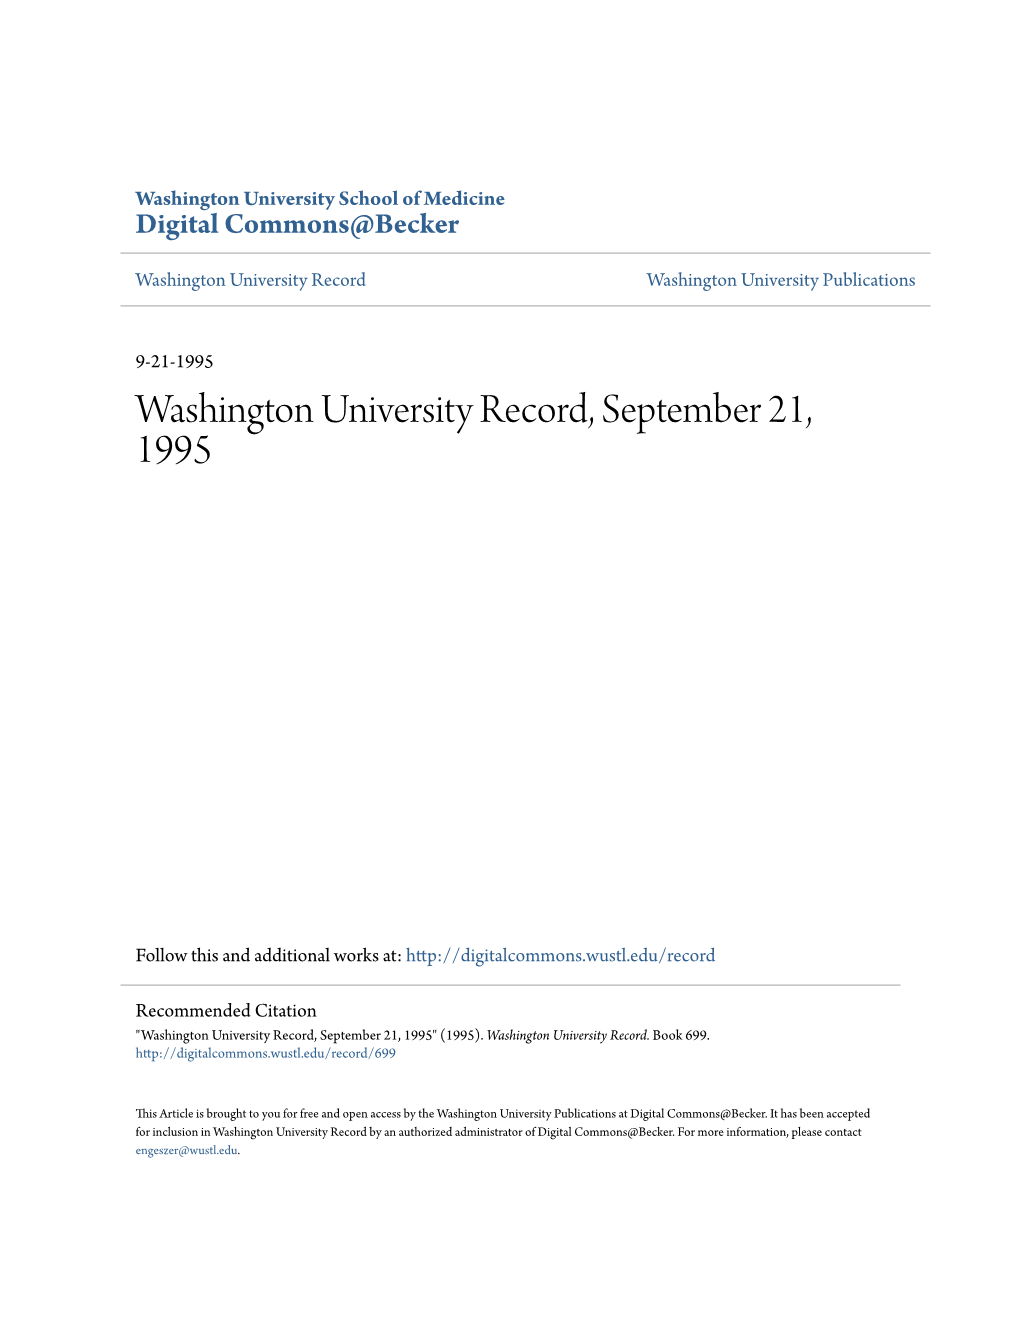 Washington University Record, September 21, 1995